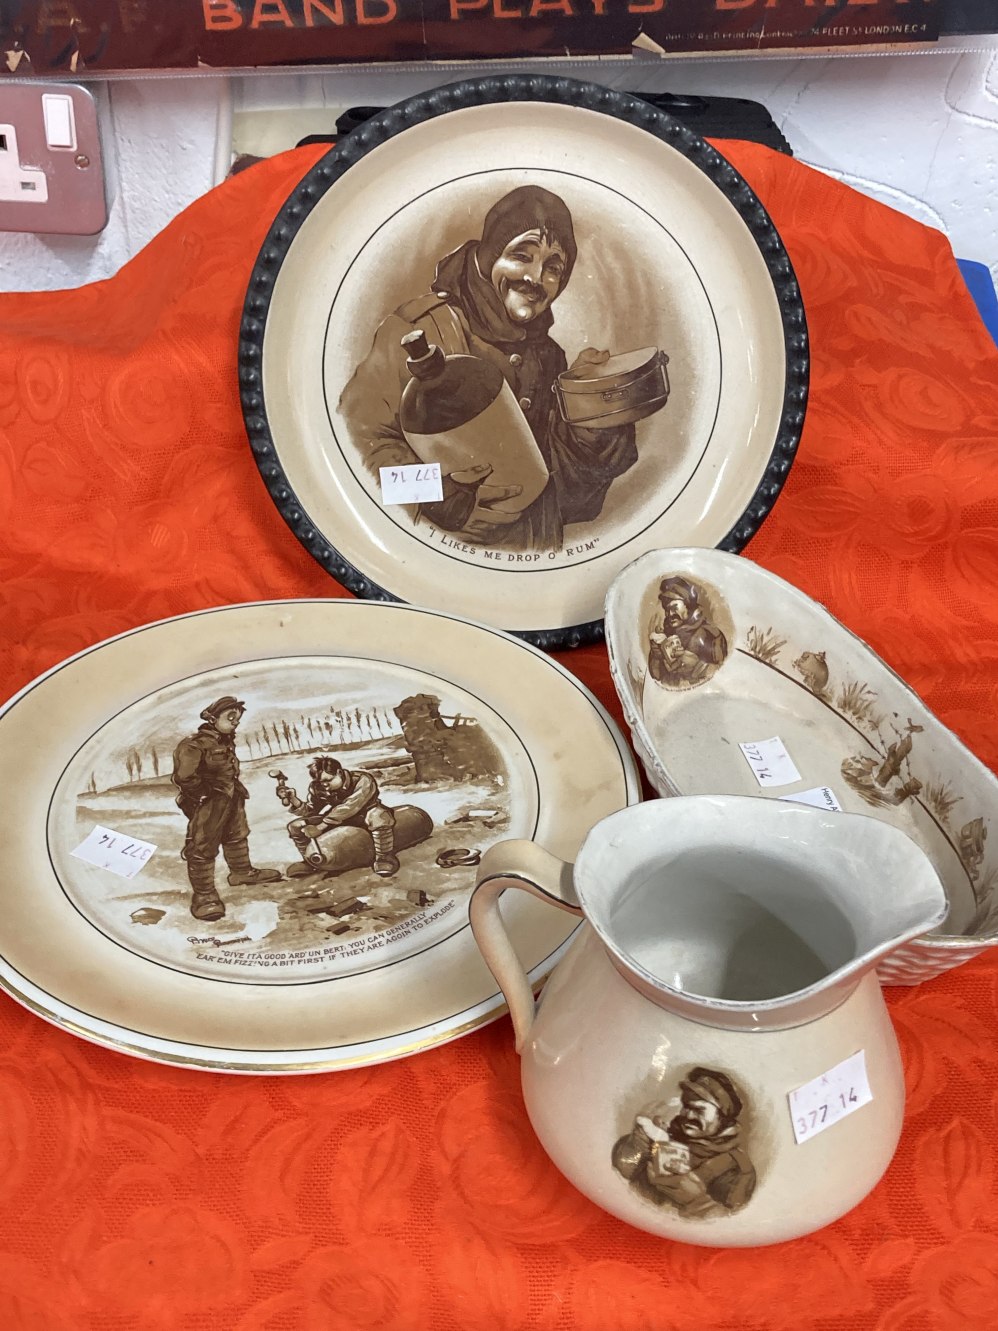 WWI Ceramics: Grimwades Bruce Bairnsfather ware pottery includes bon bon dishes, Old Bill plate 'I